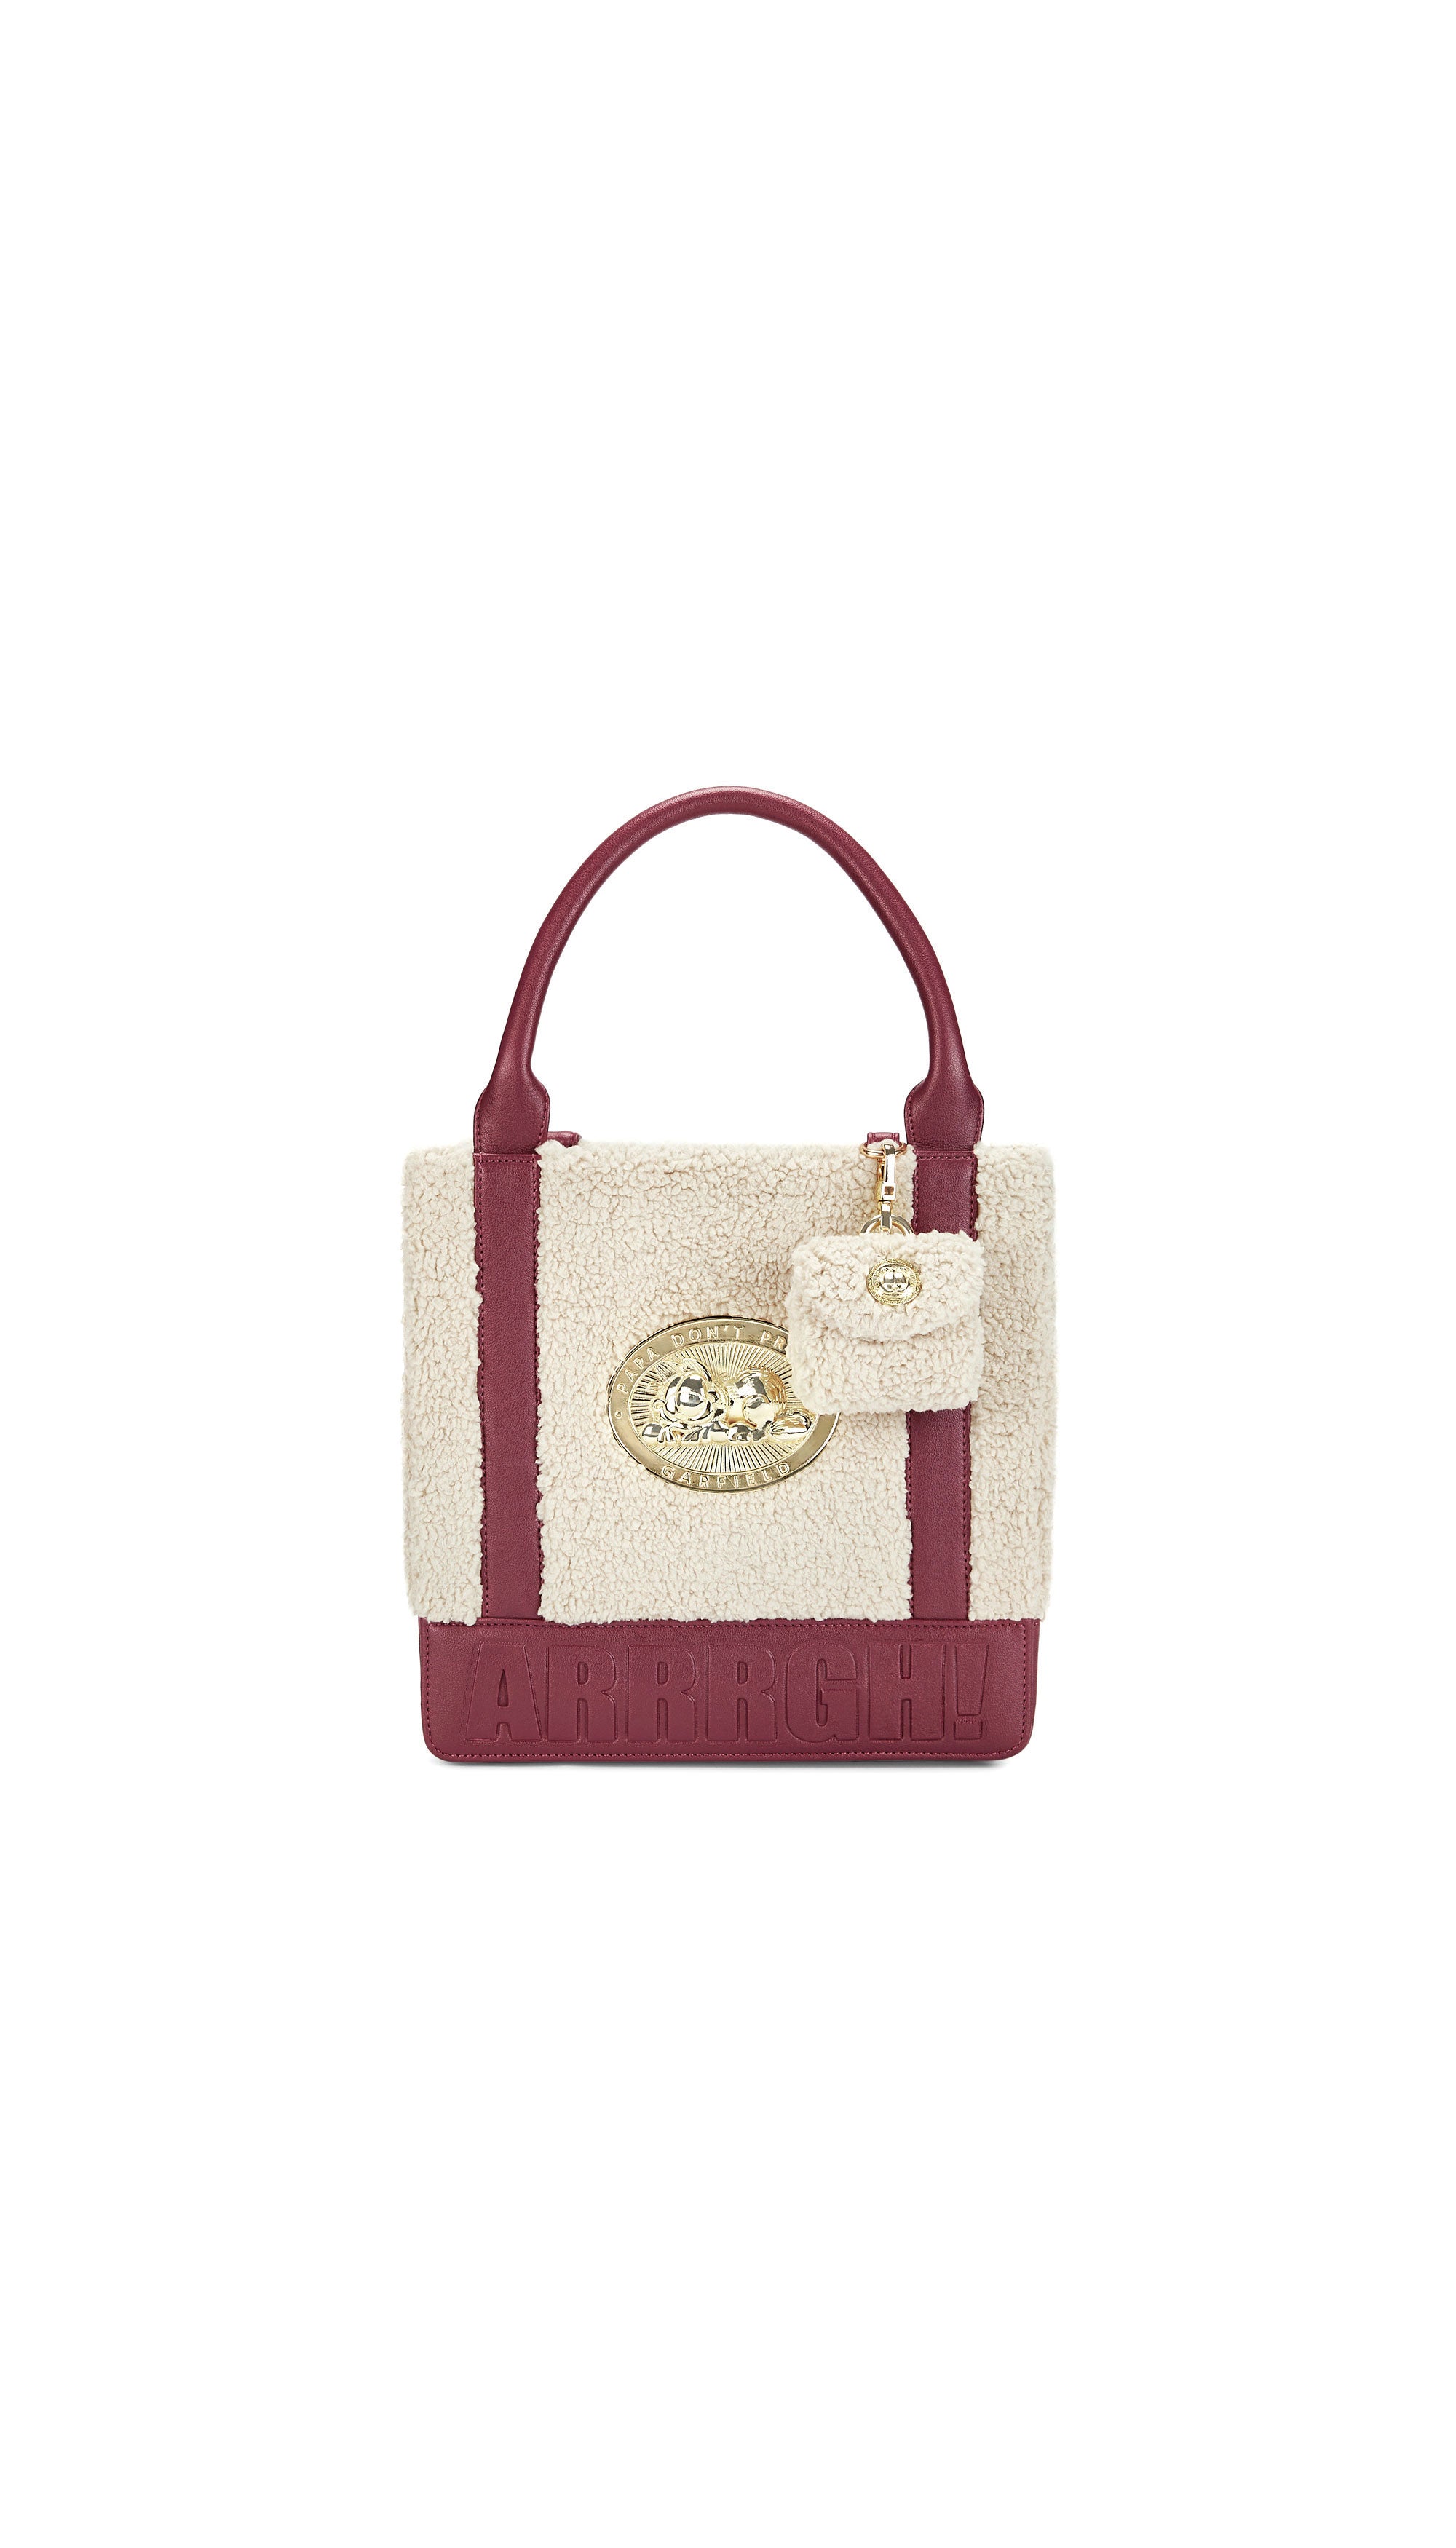 Ridiculously Cute Miniature Designer Bags | Bags, Tiny purses, Mini handbags